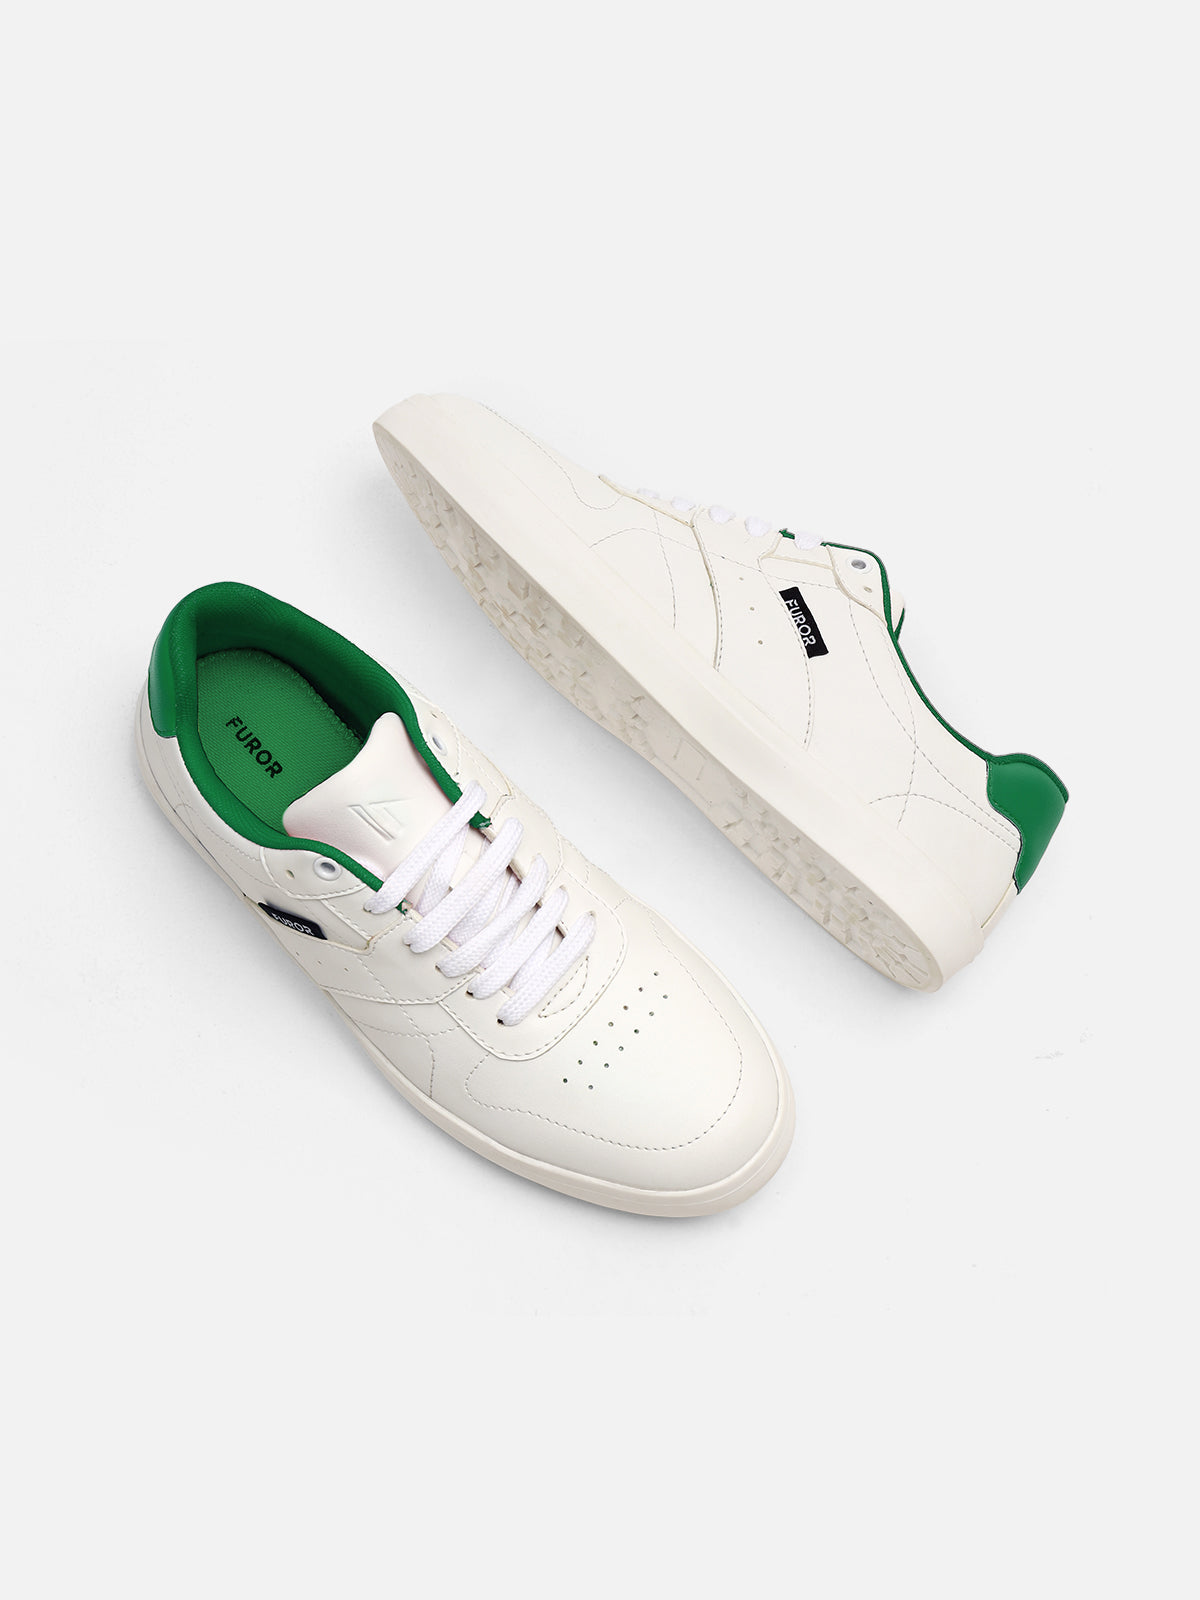 Contrast Sneakers - FAMS23-008